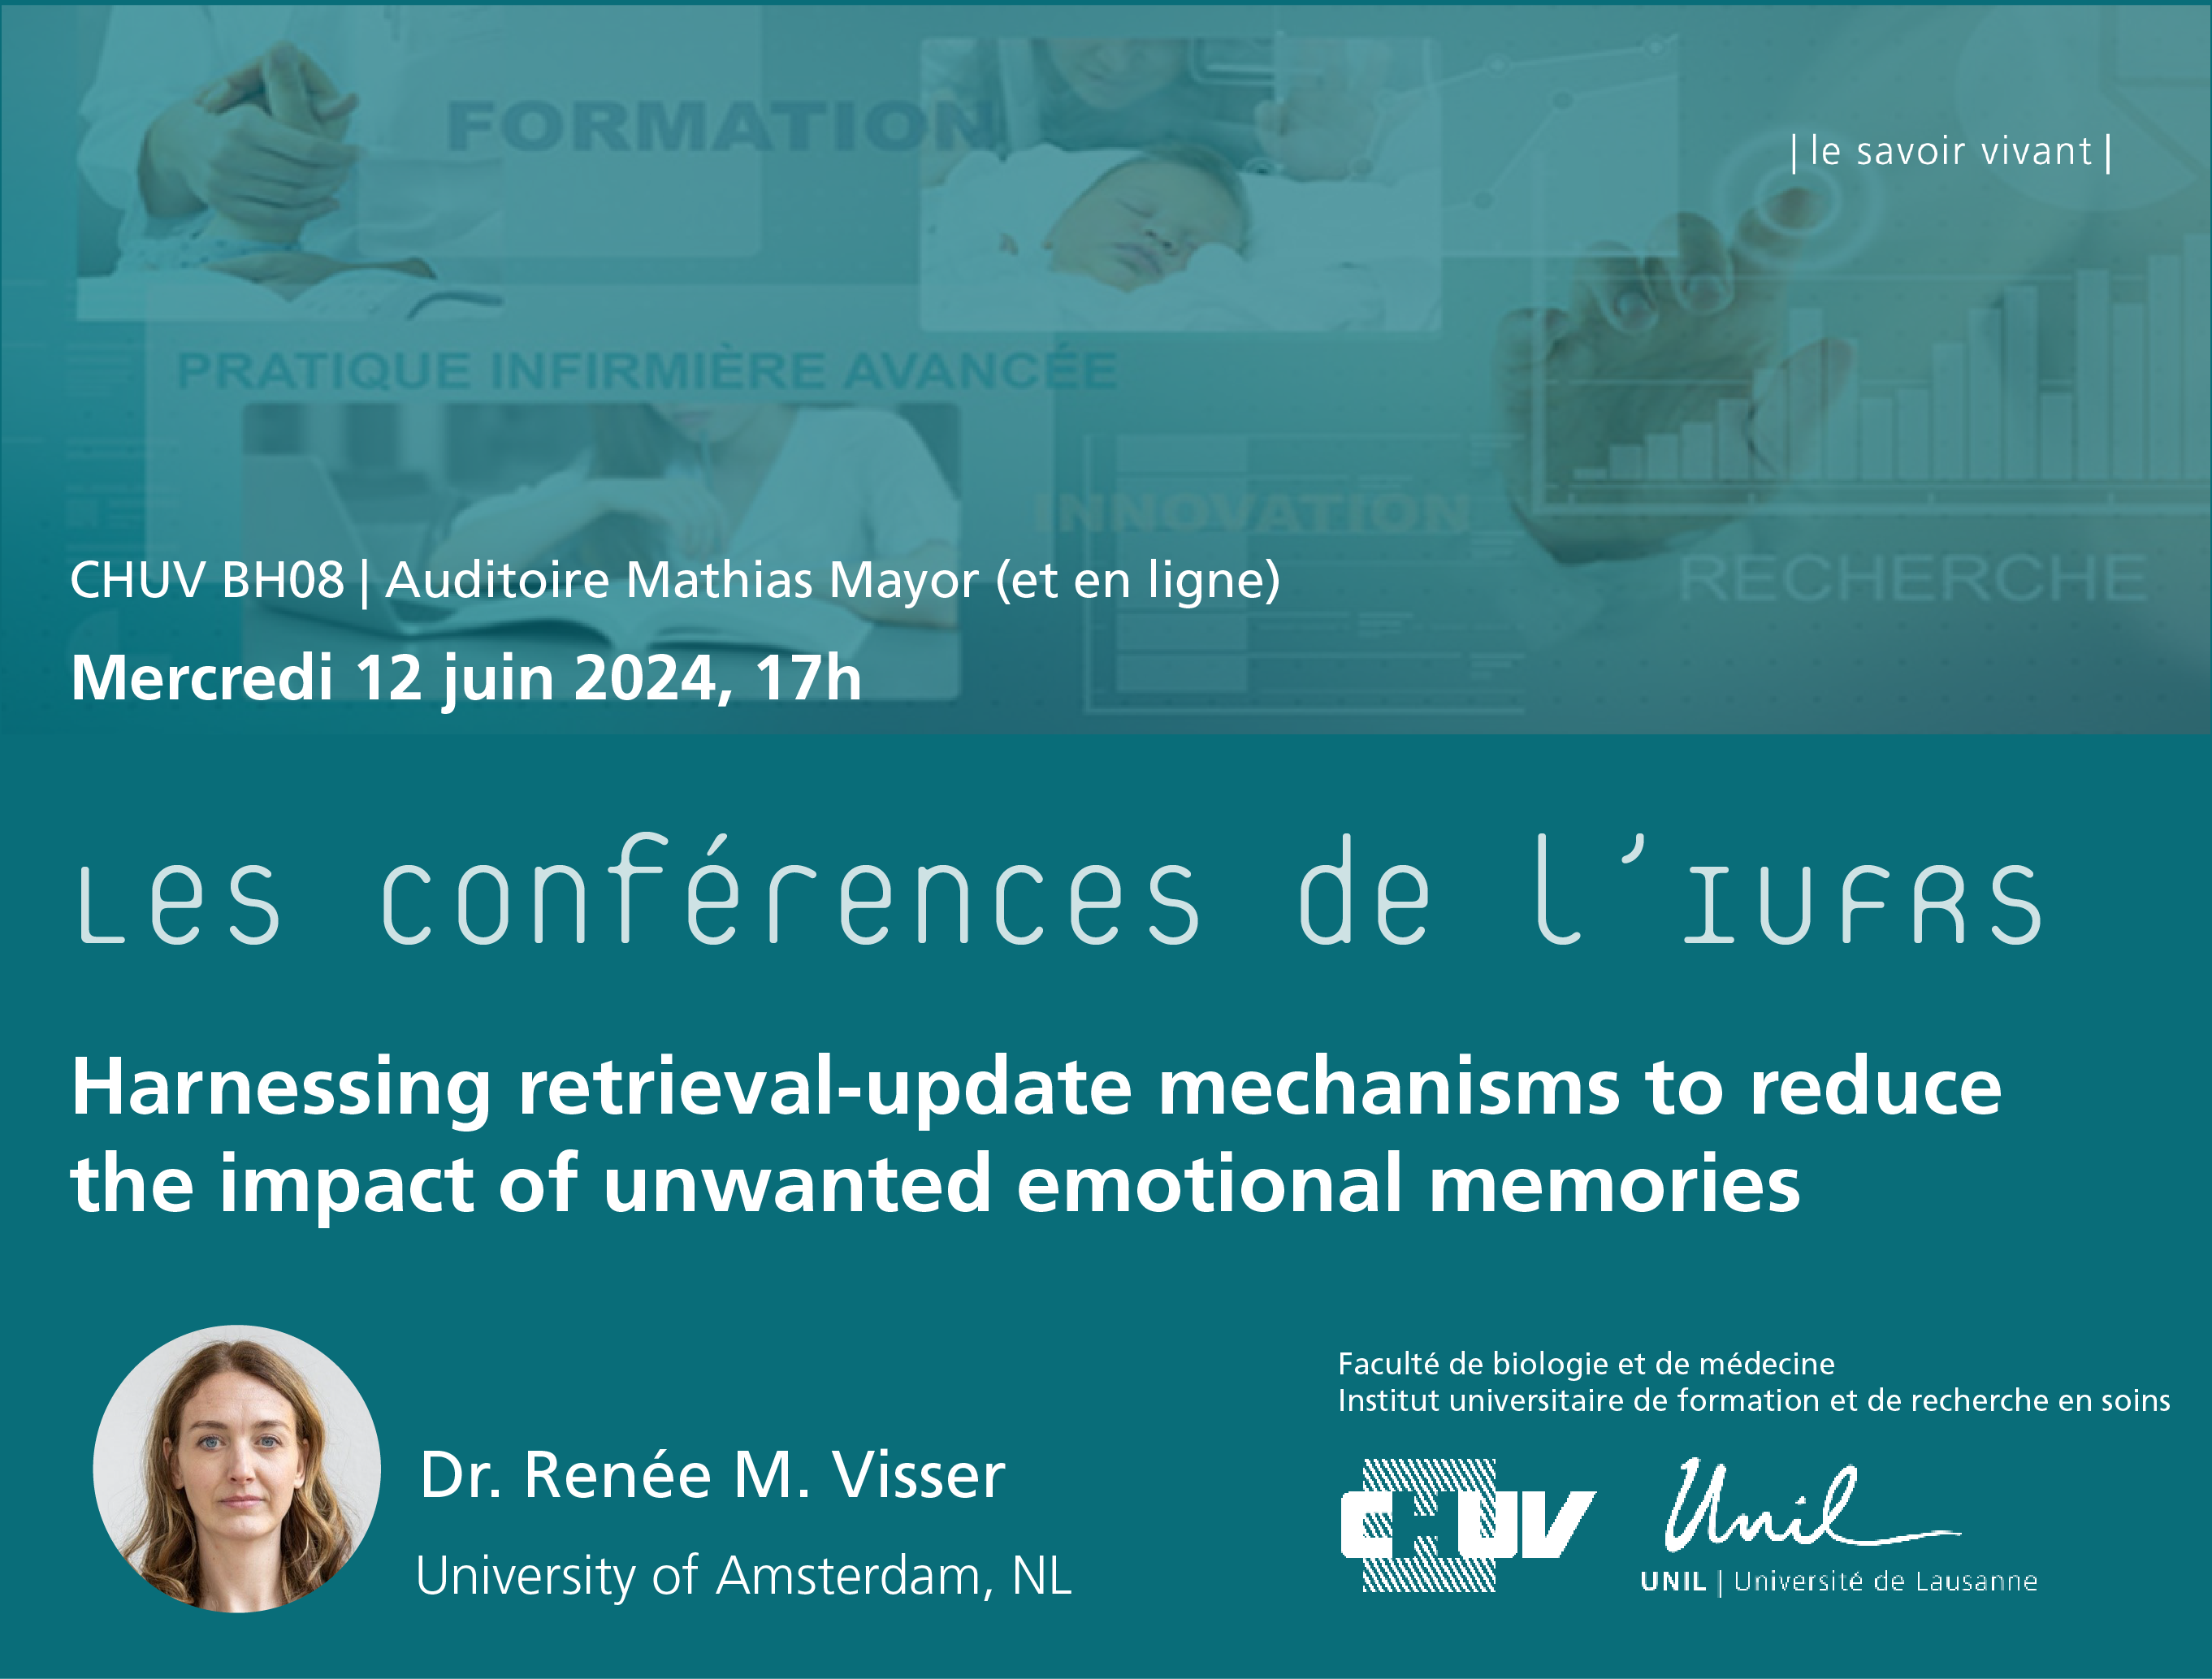 Conférence de l'IUFRS - Dre Renée M. Visser: Harnessing retrieval-update mechanisms to reduce the impact of unwanted emotional memories